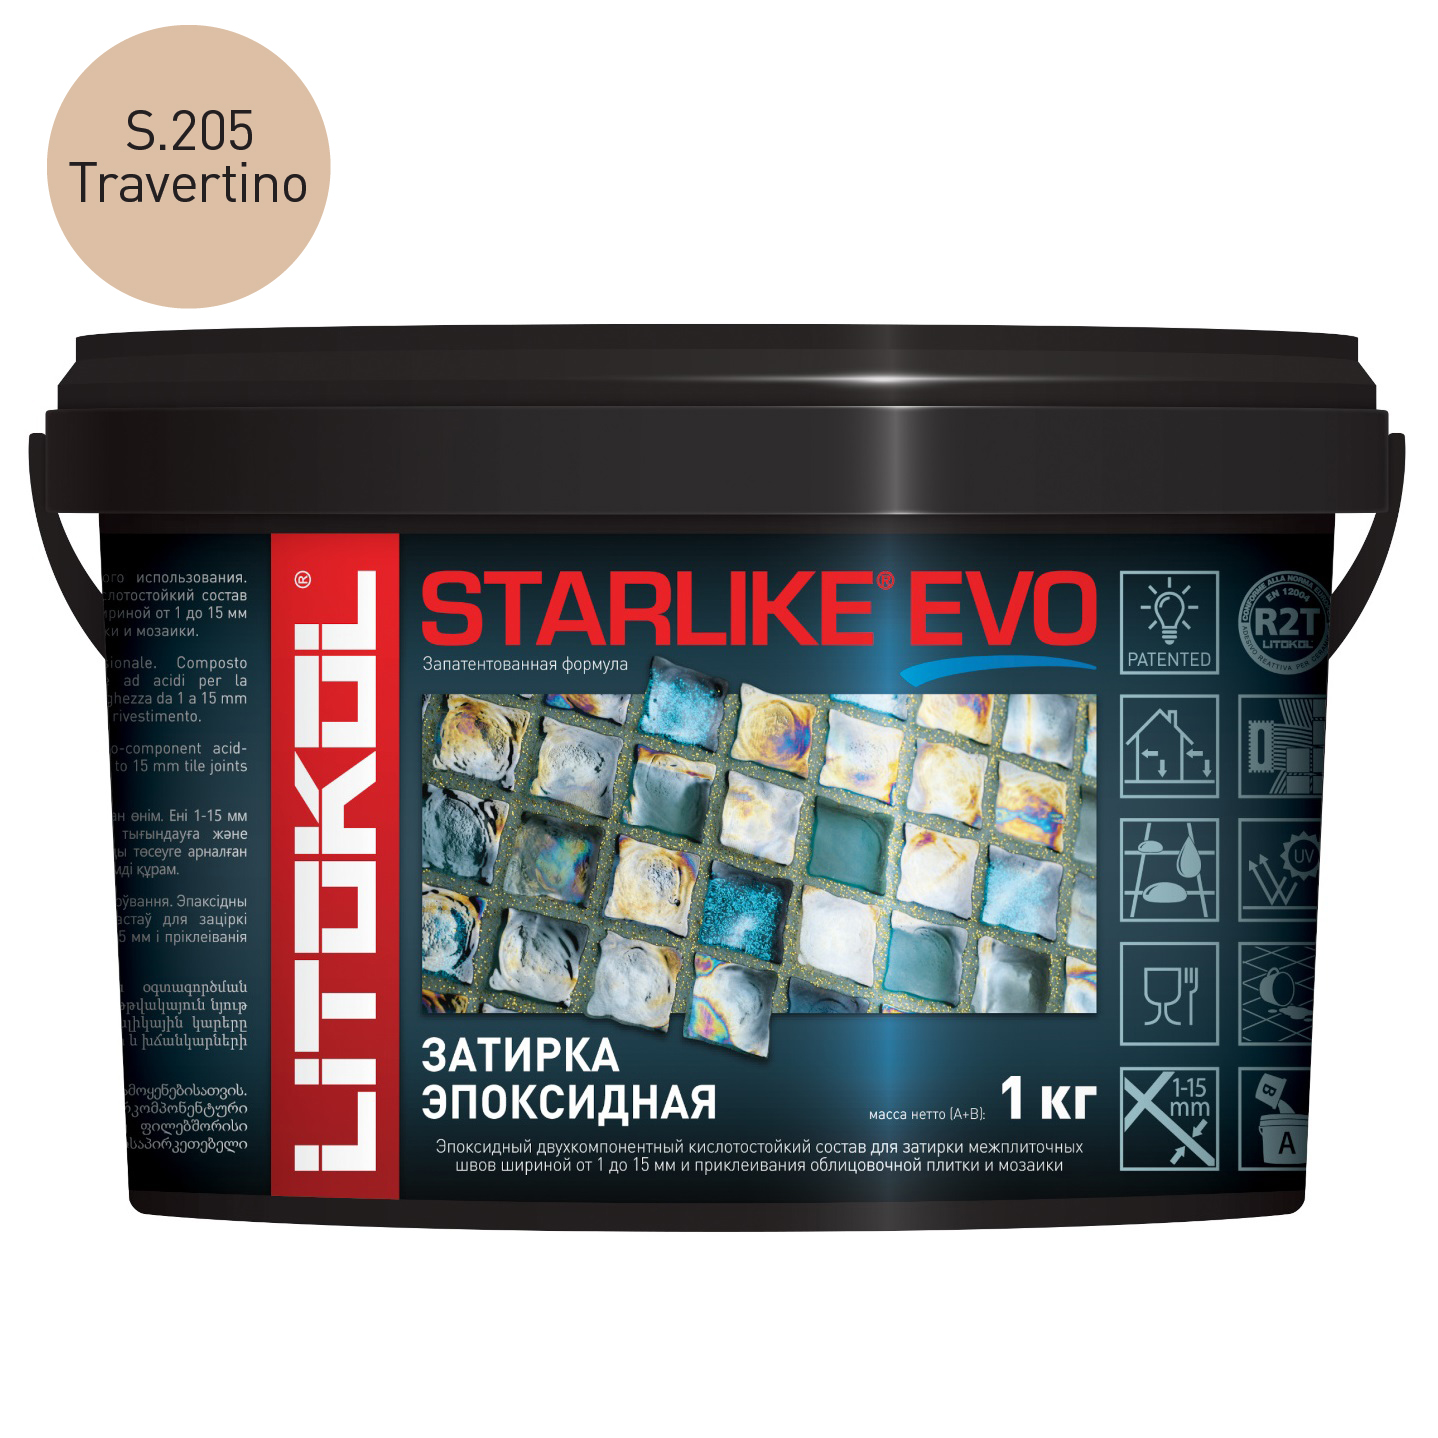 Затирка эпоксидная Litokol Starlike Evo S.205 Travertino (1 кг.)